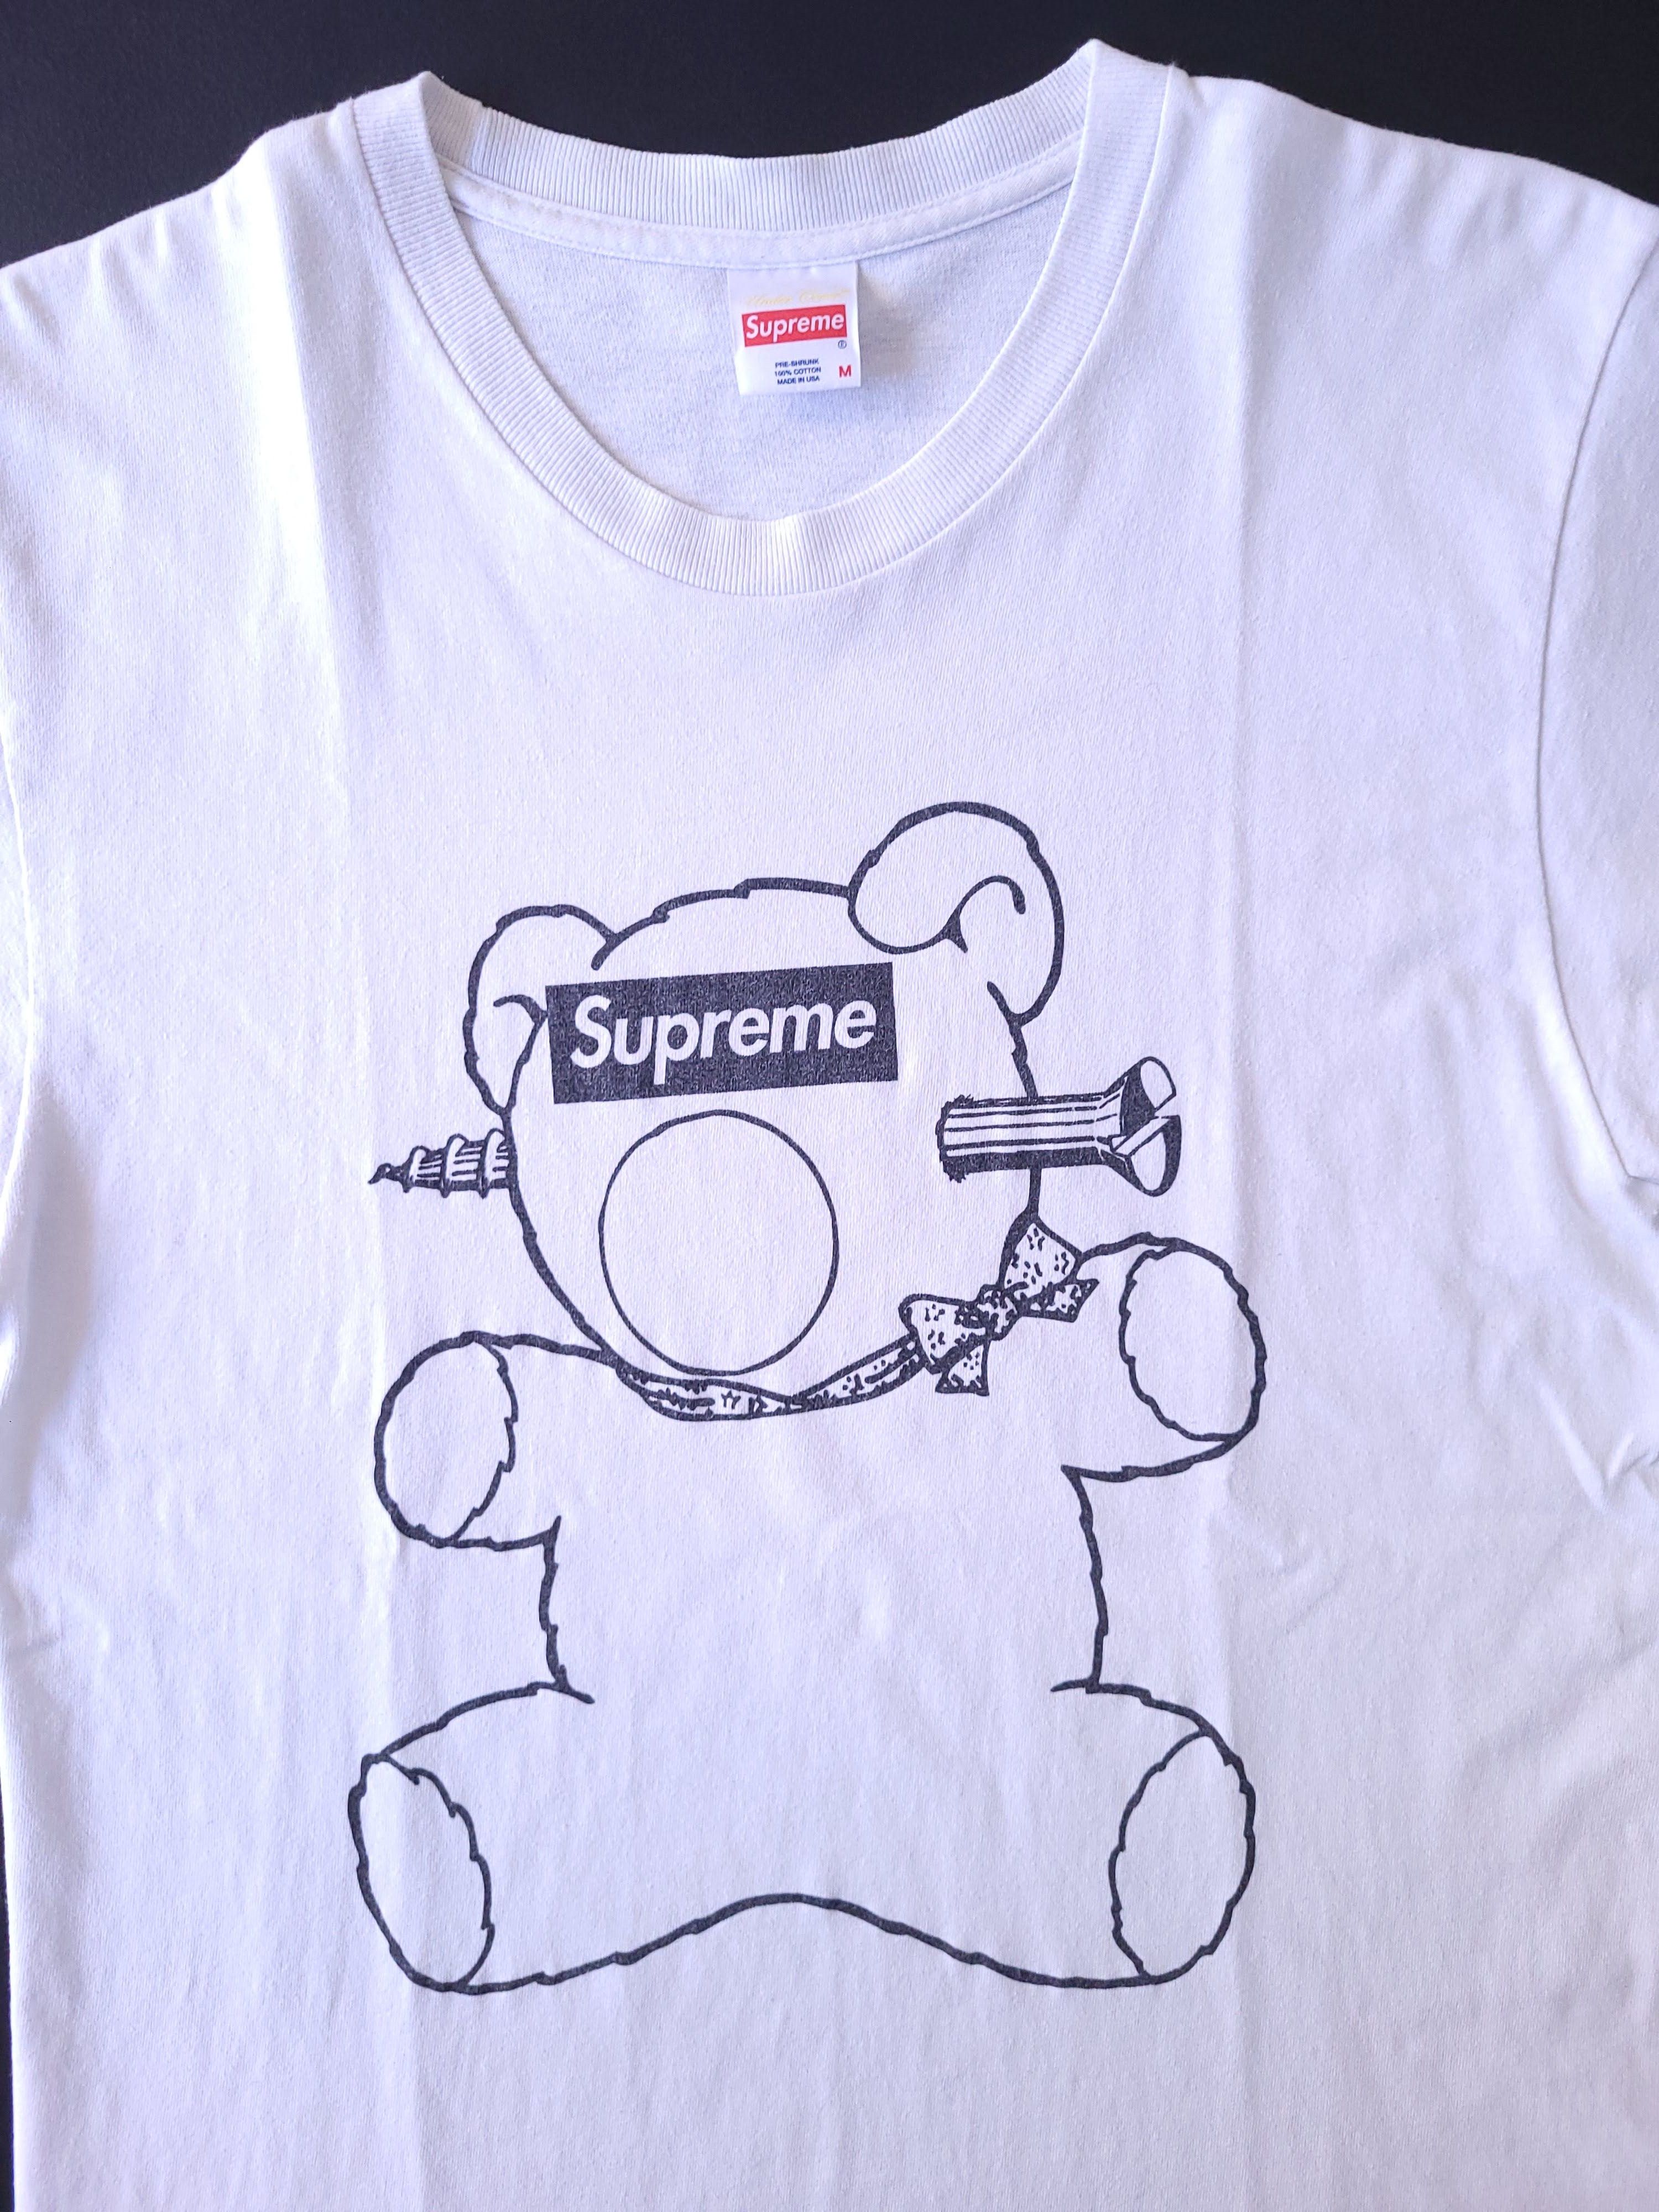 Supreme Supreme Undercover Bear Tee | Grailed